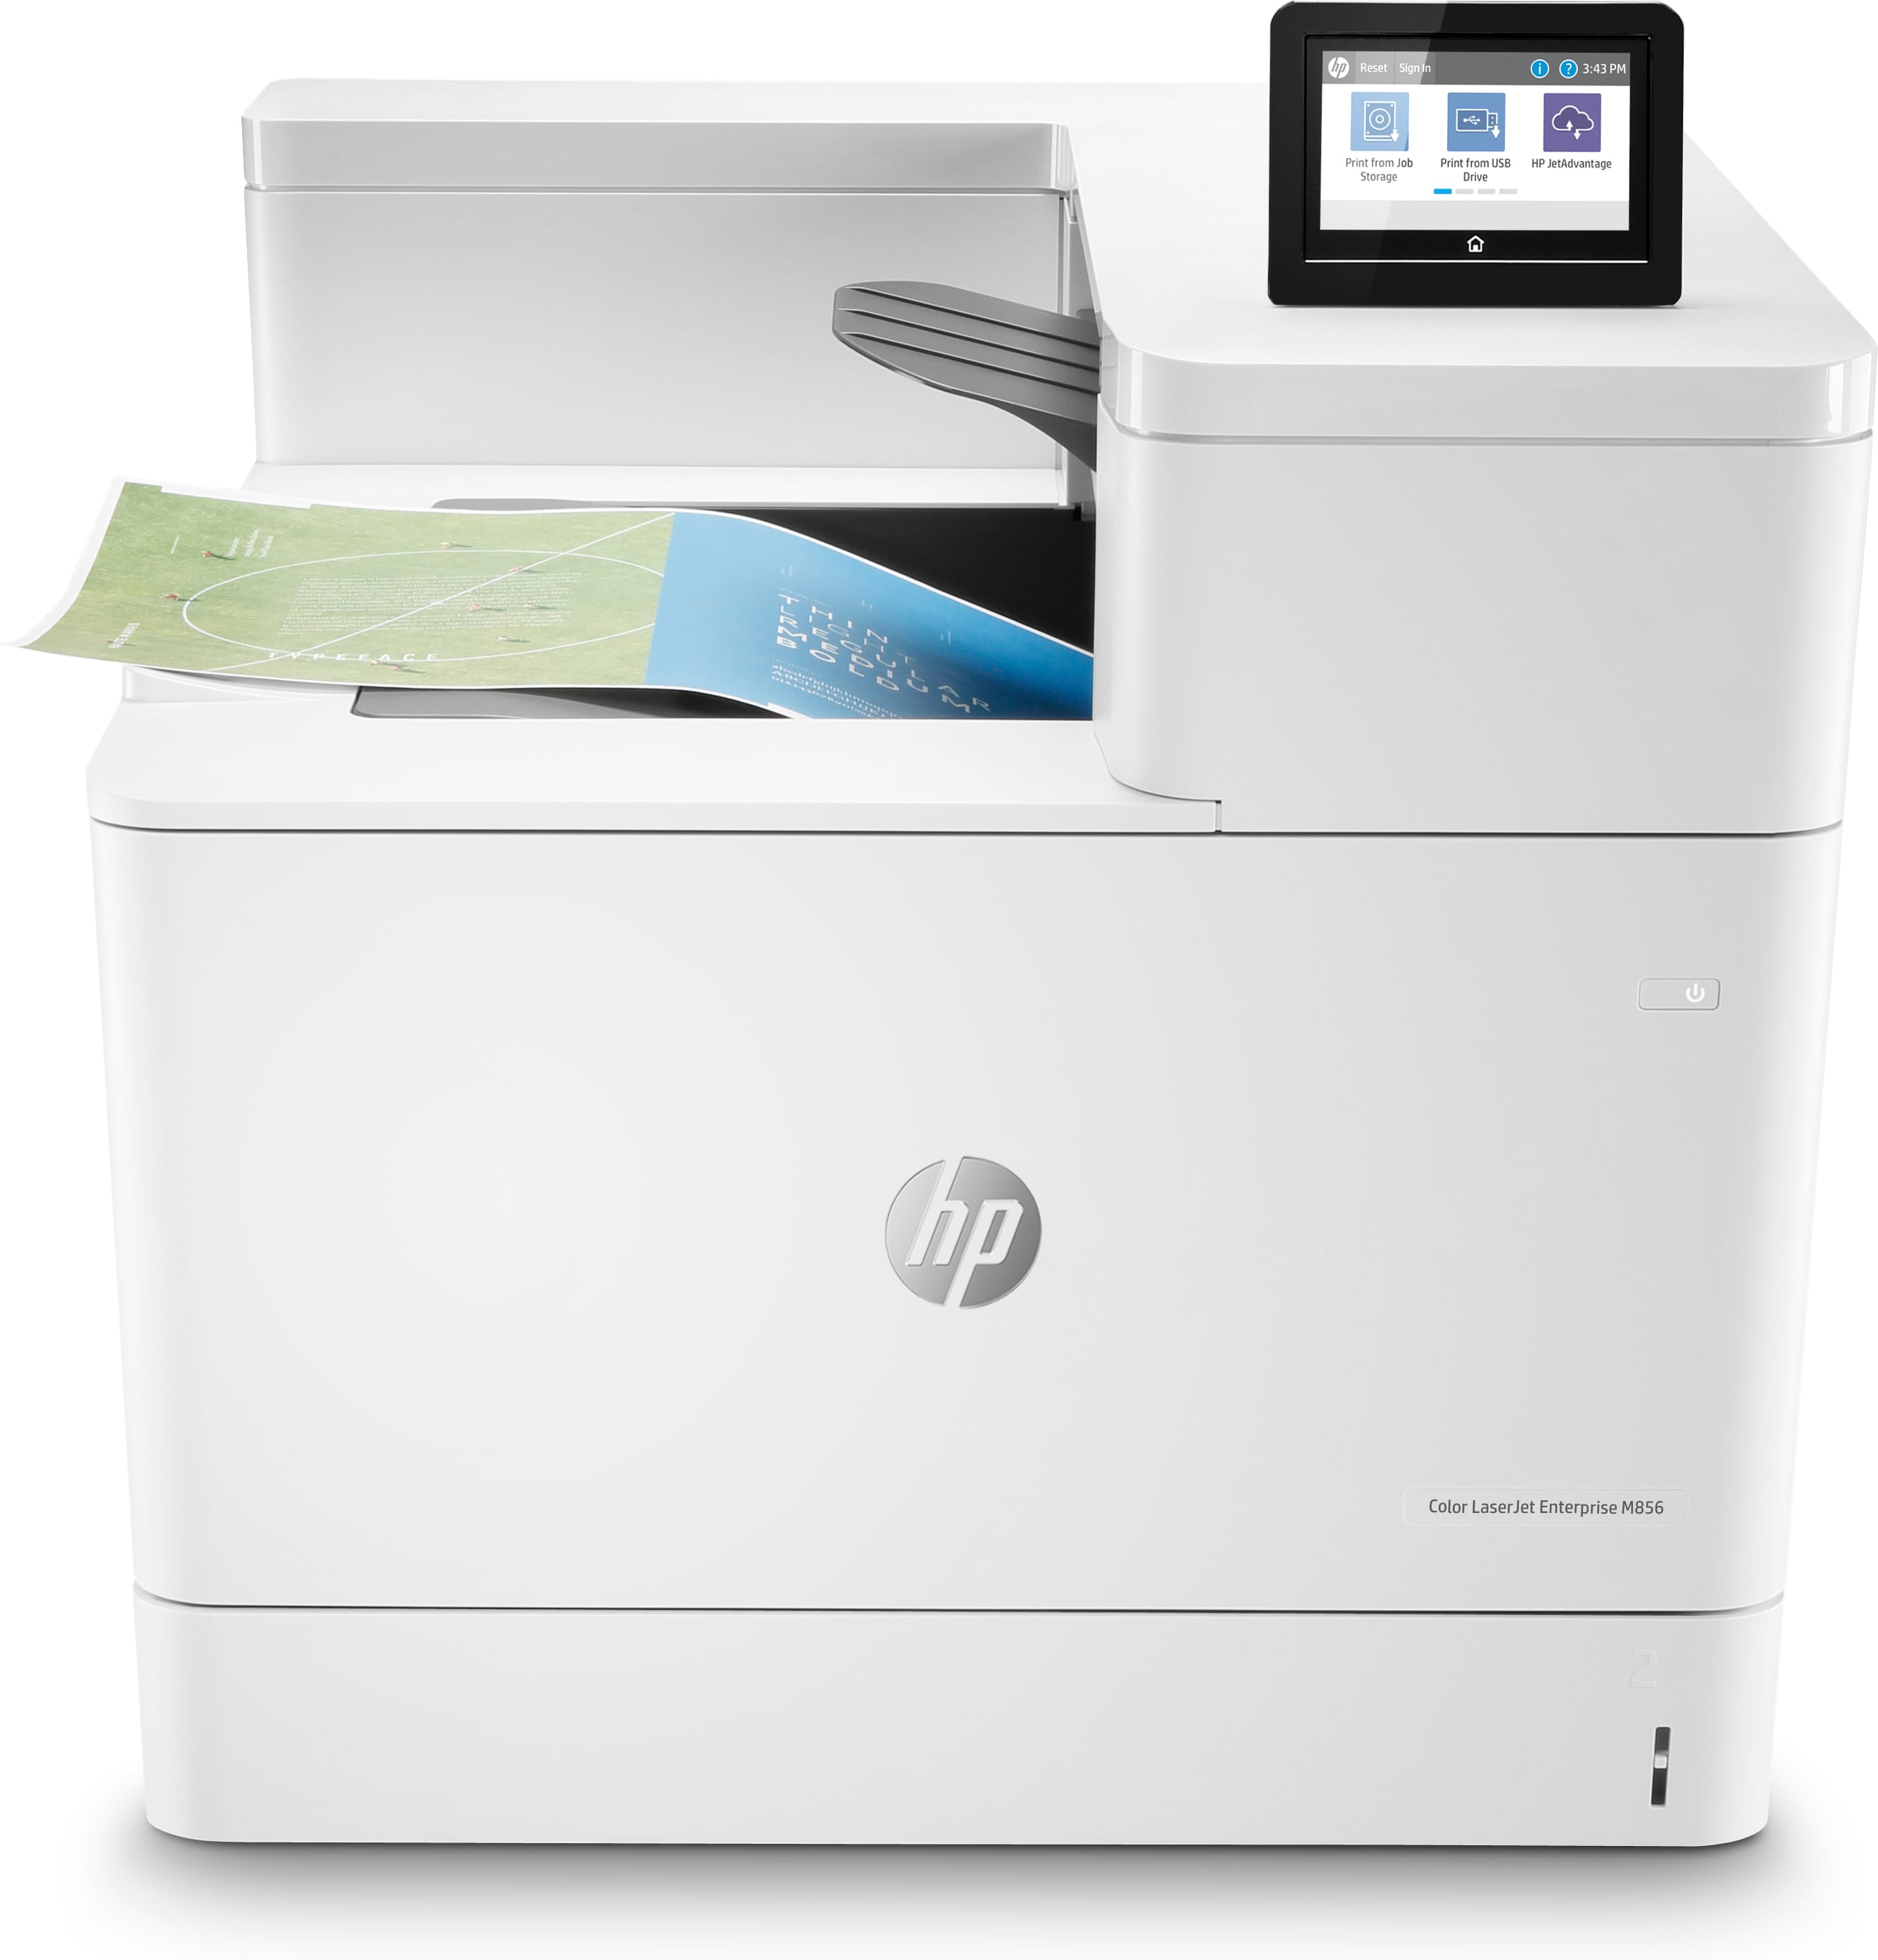 HP Color LaserJet Enterprise M856dn, Utskrift, Dubbelsidig utskrift